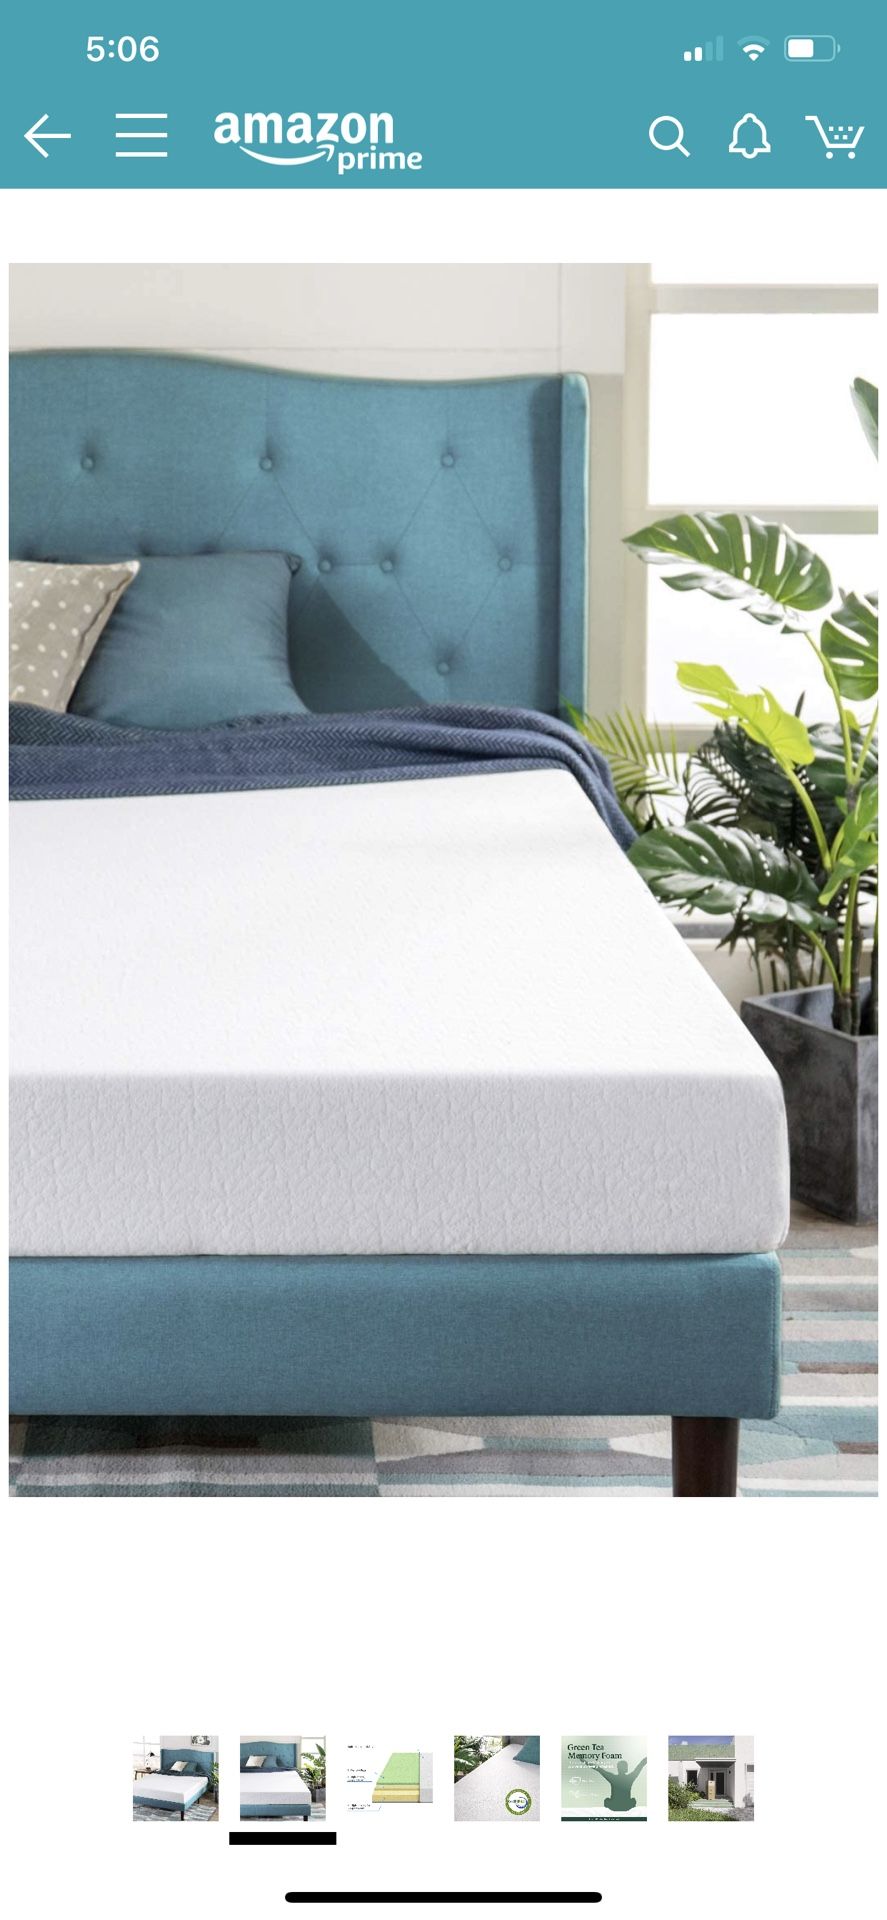 Brand new memory foam mattress